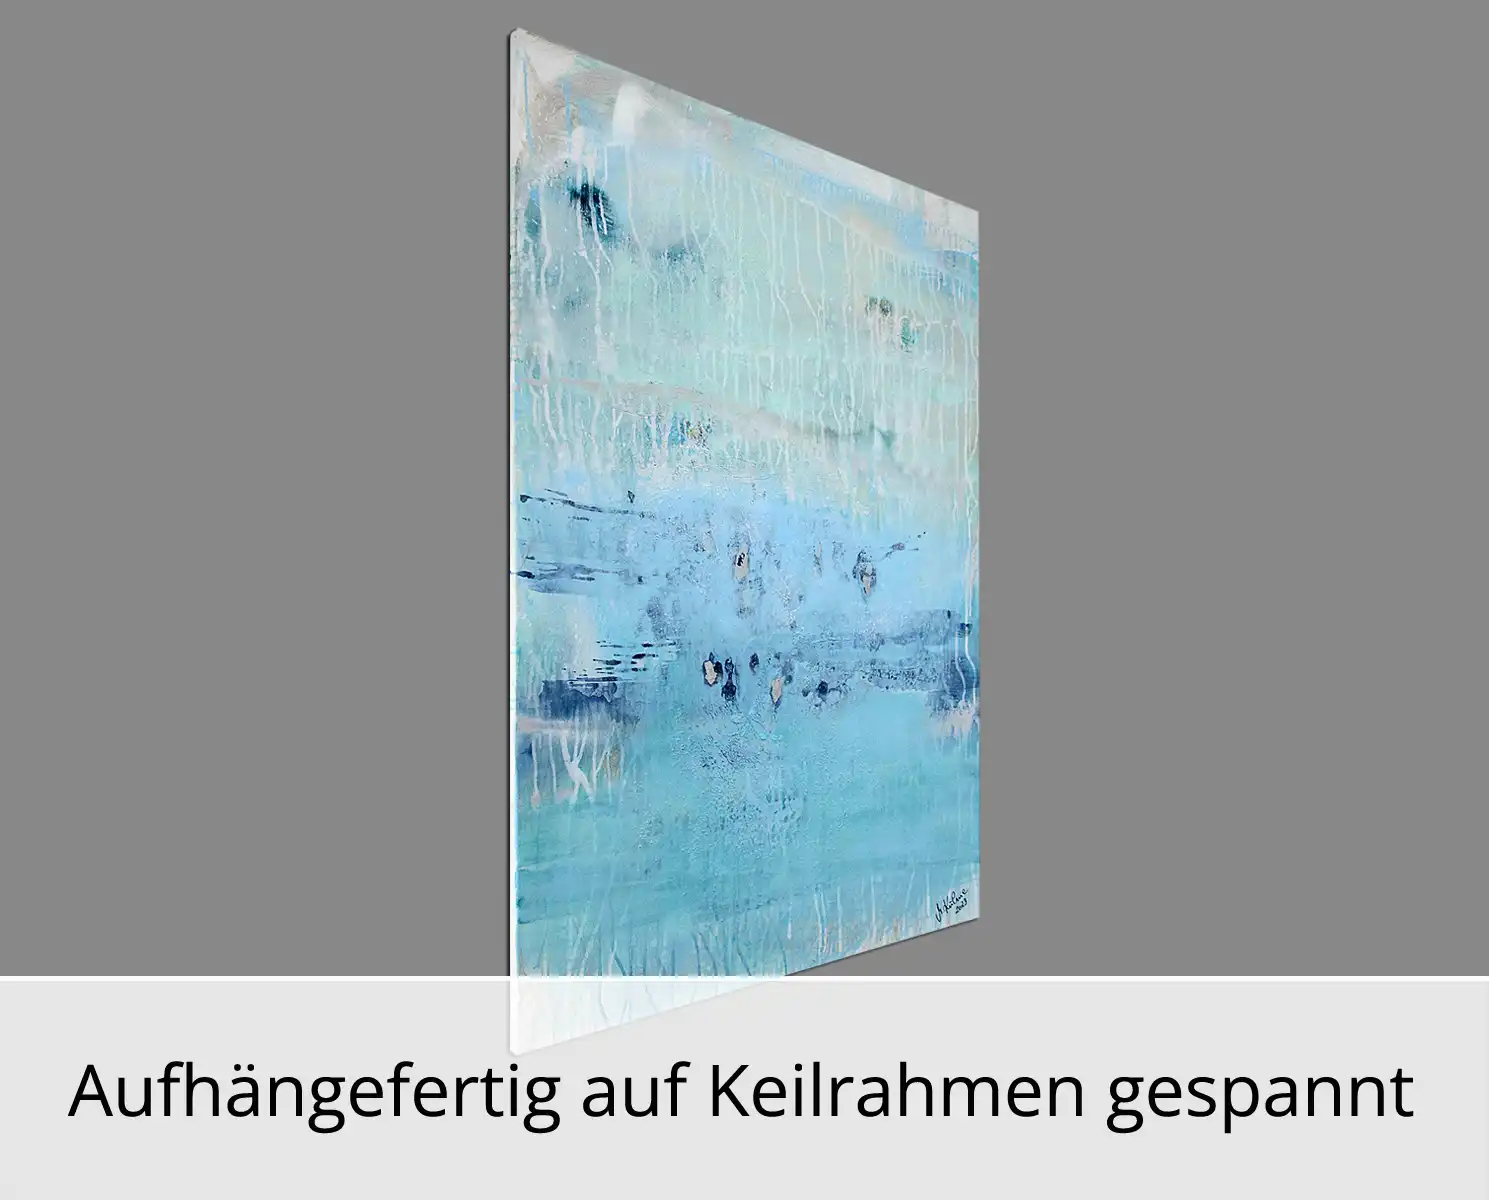 M.Kühne: "Winter am Meer", modernes Originalgemälde (Unikat)